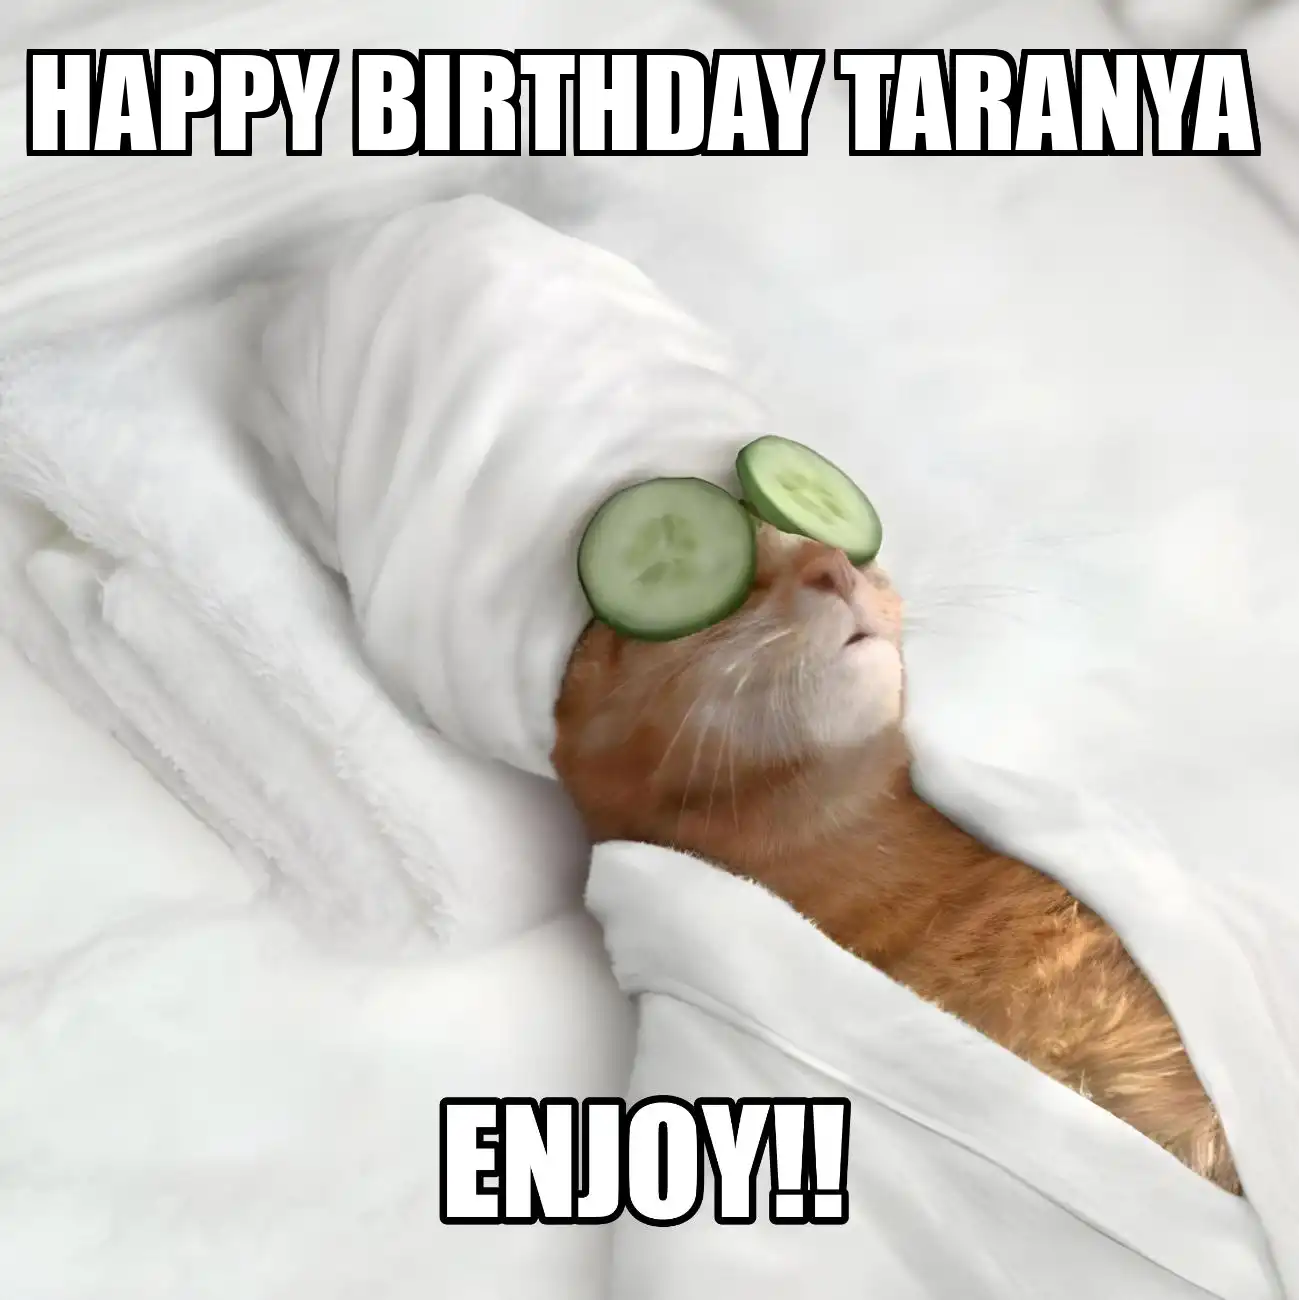 Happy Birthday Taranya Enjoy Cat Meme